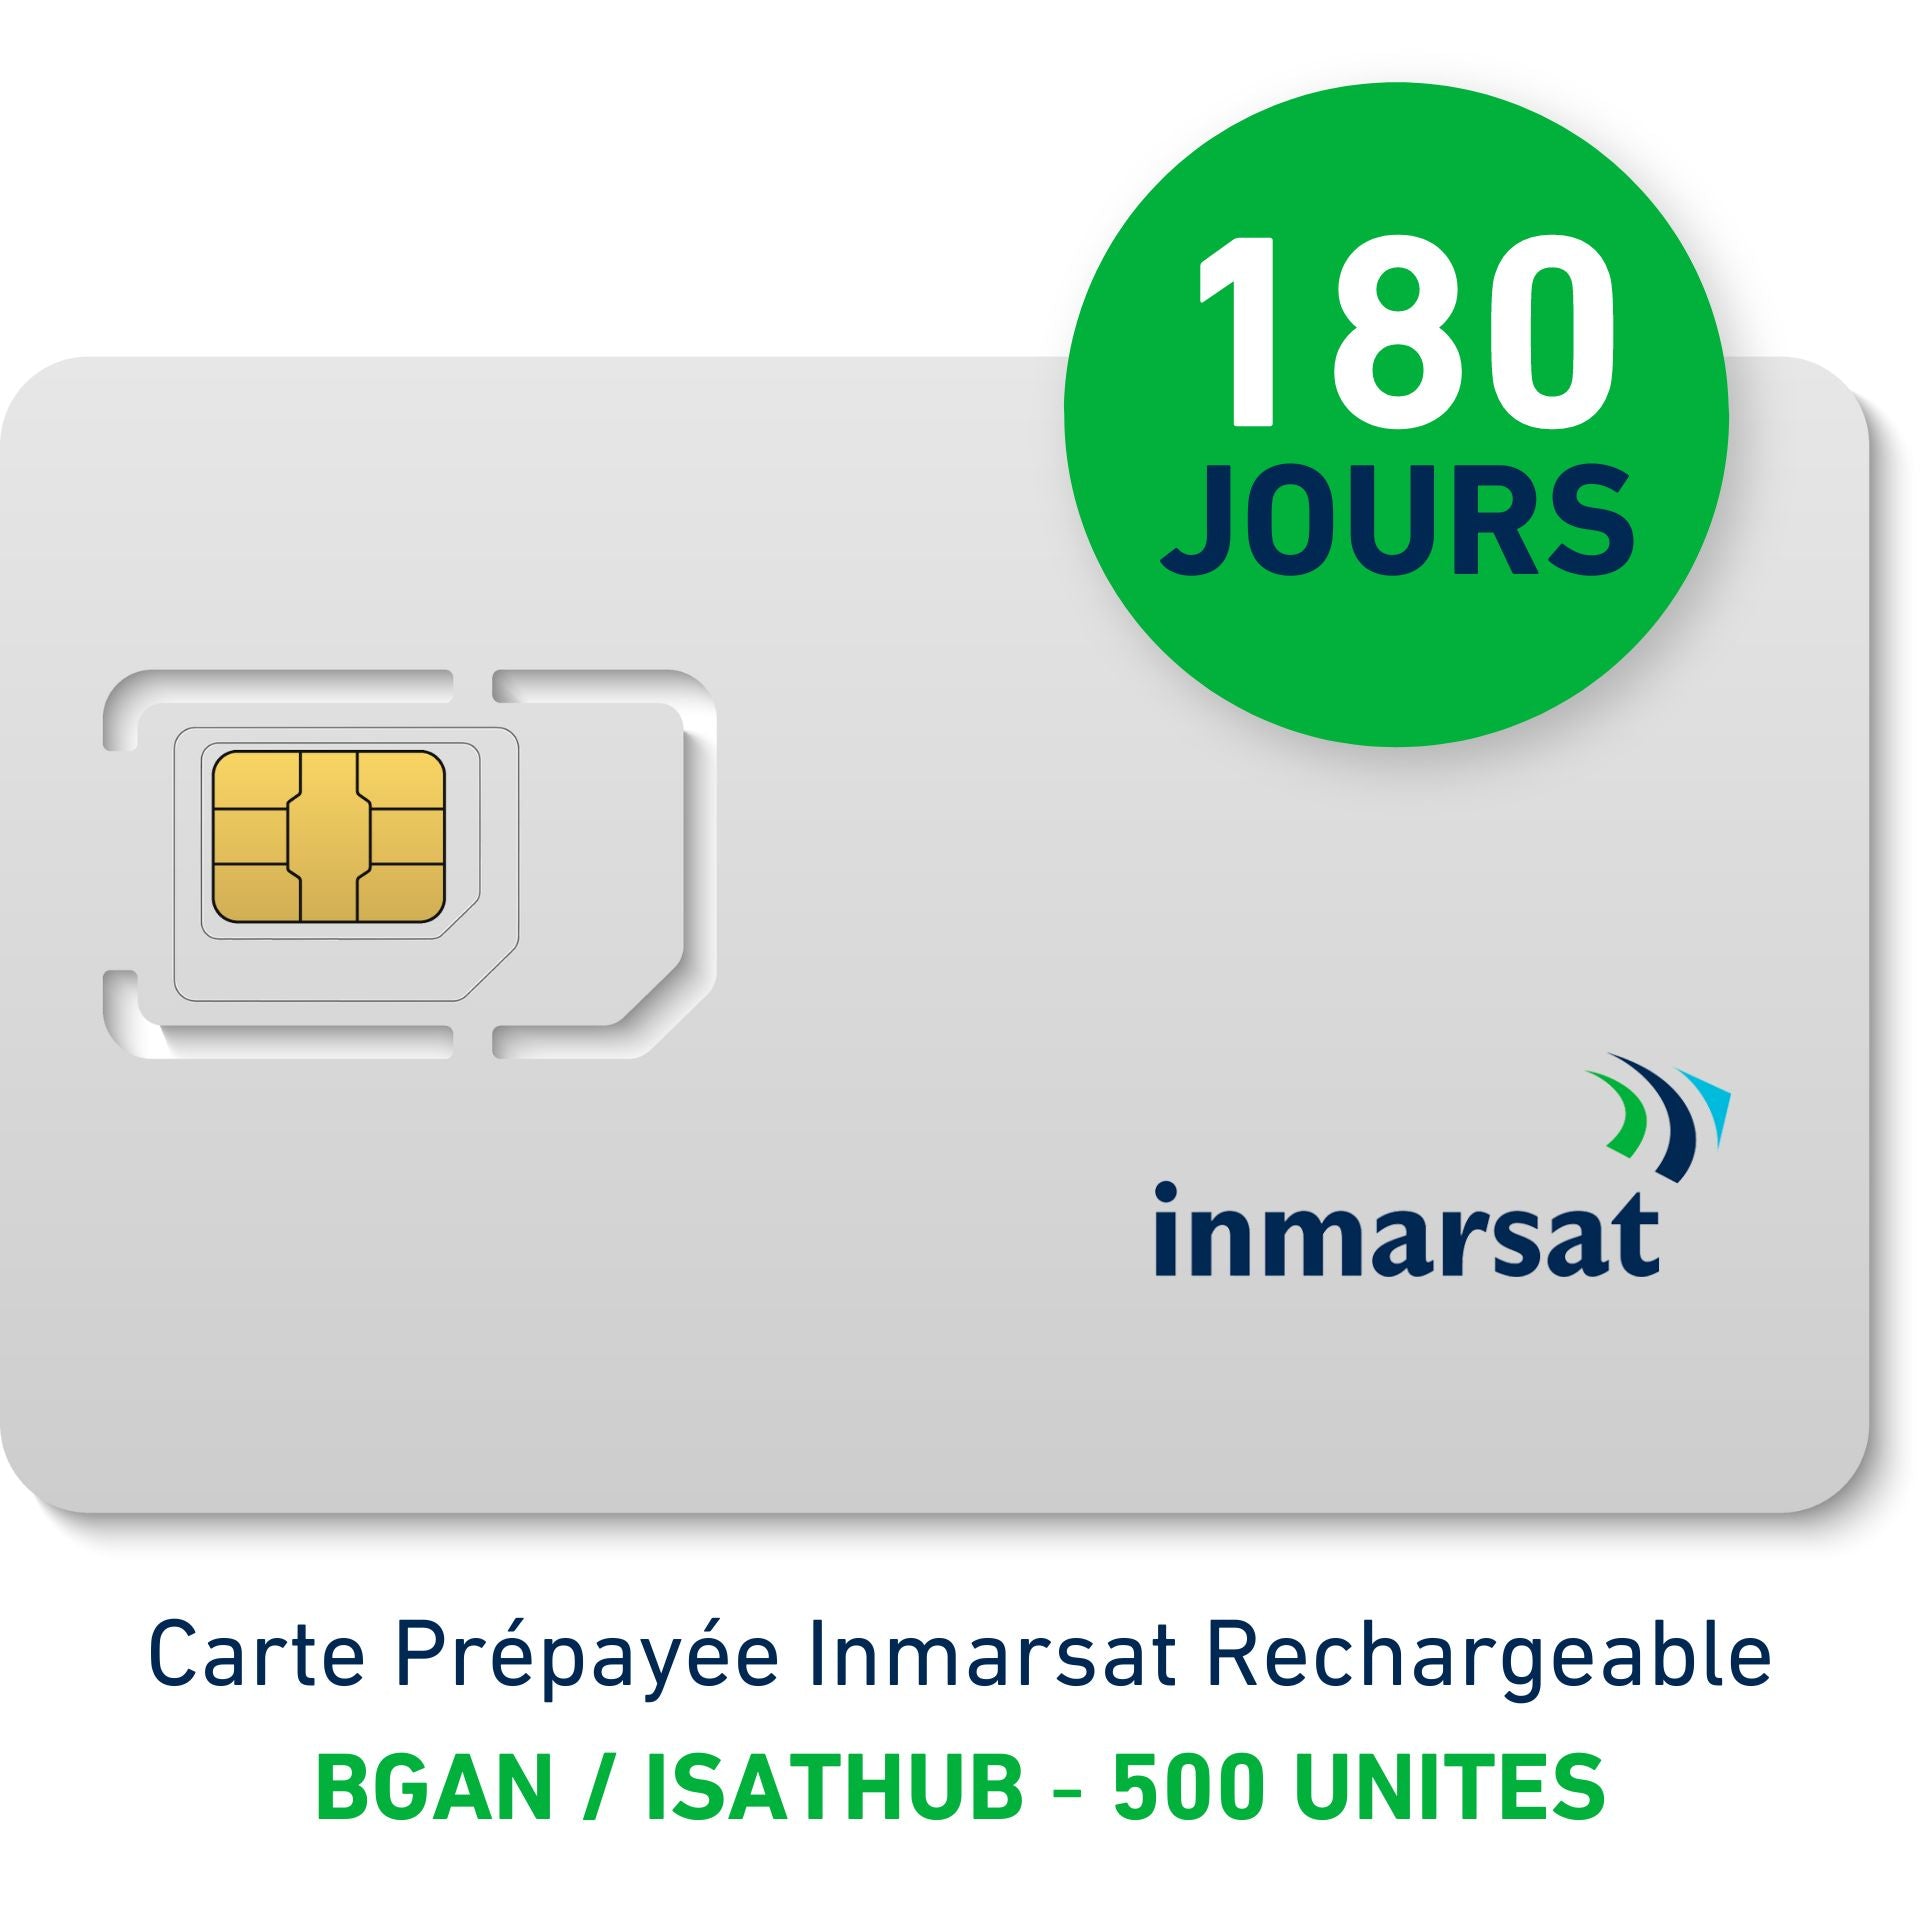 INMARSAT Rechargeable BGAN/IsatHub Prepaid Card - 500 UNITS - 180 DAYS